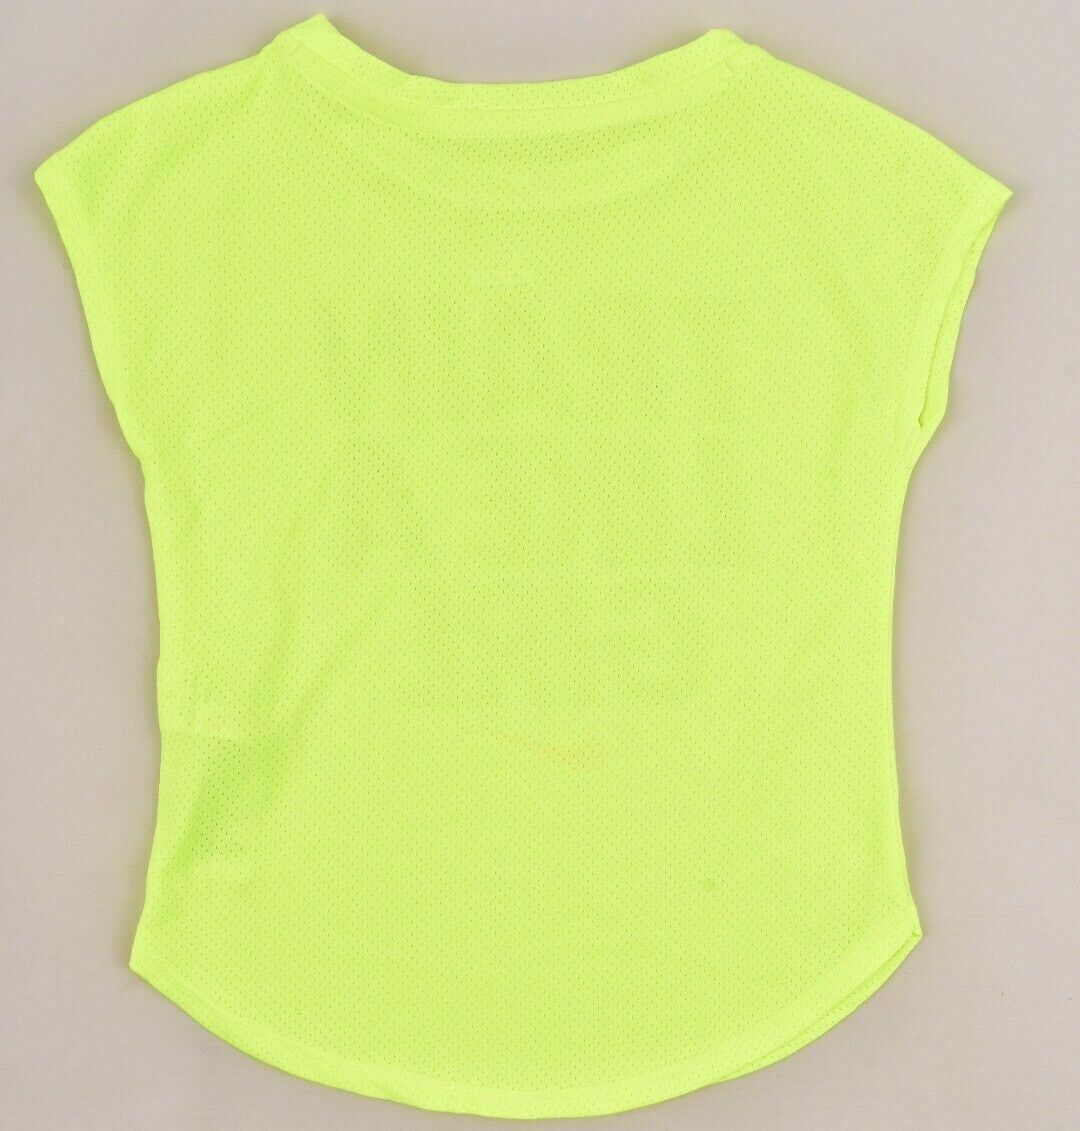 NIKE Girls' Kids' DRI-FIT Slogan Print T-shirt / Top, Fluo Green, 1 year 2 years